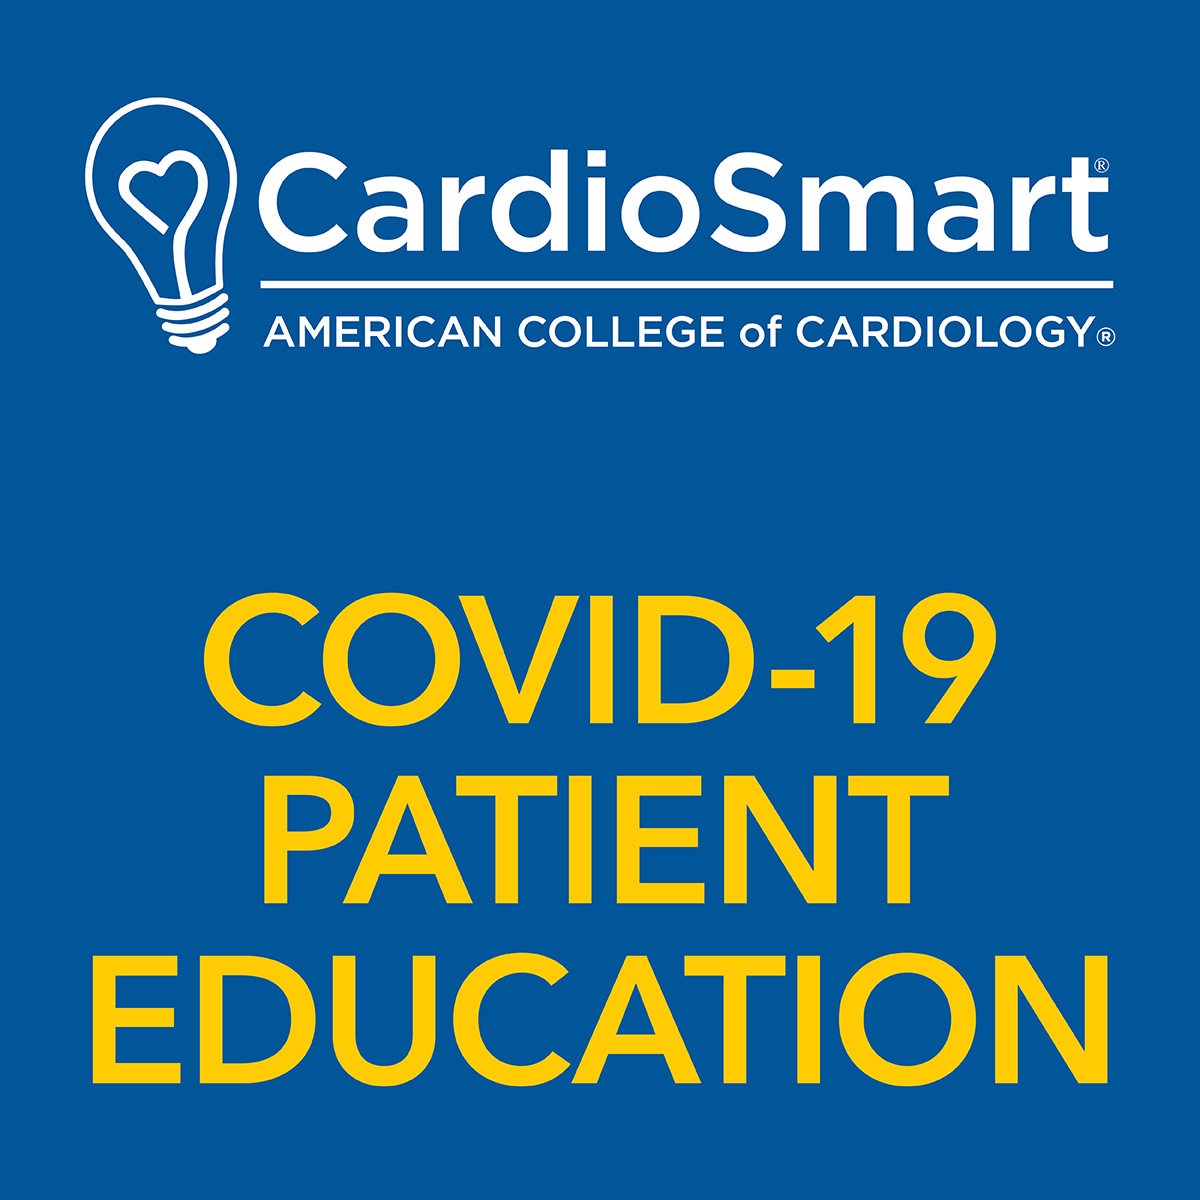 CardioSmart COVID-19 Patient Education